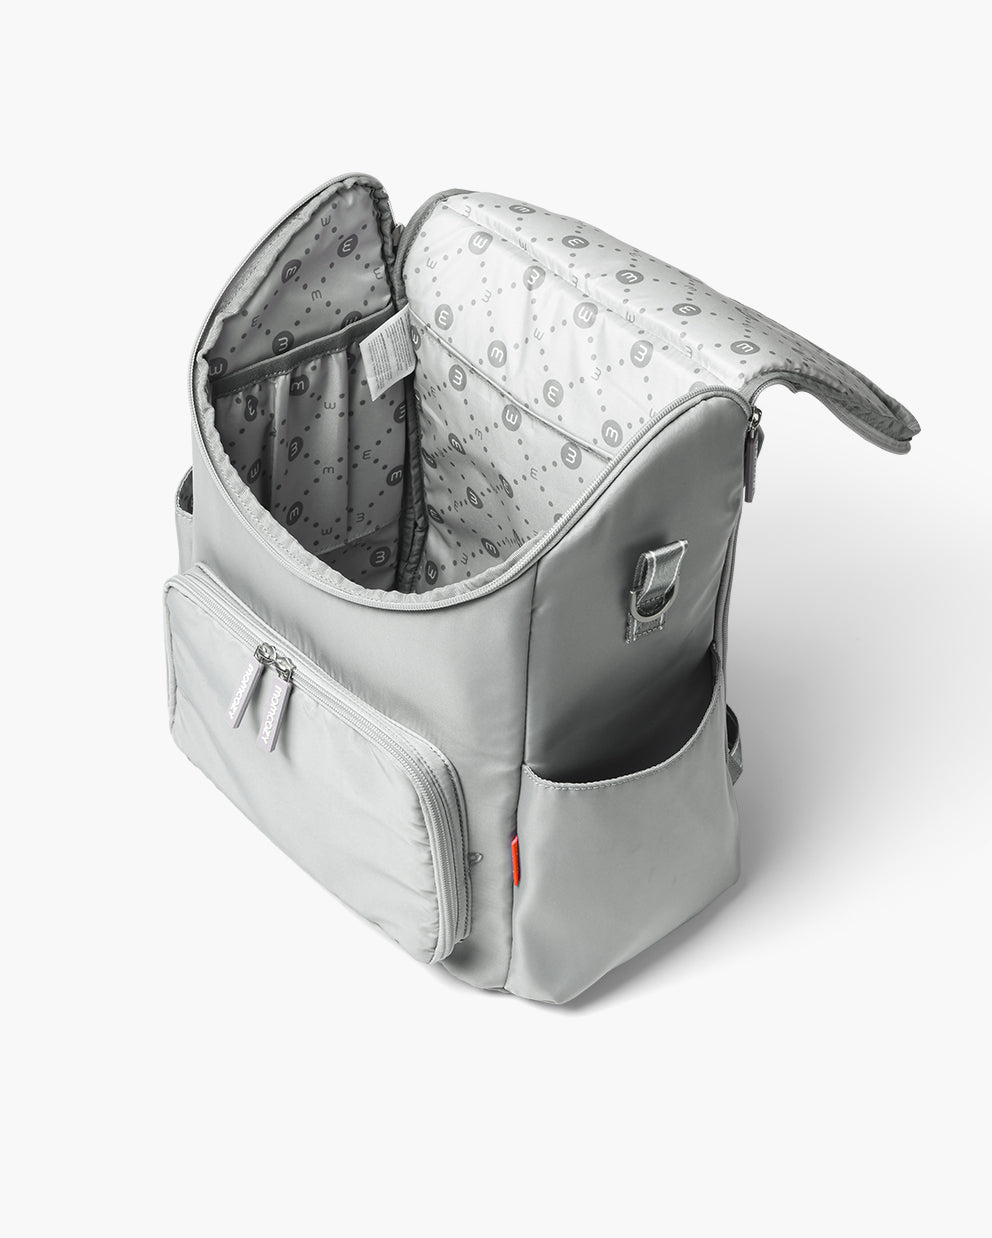 Momcozy Diaper Bag Backpack 560g Ultra Light Stylish Baby Bags